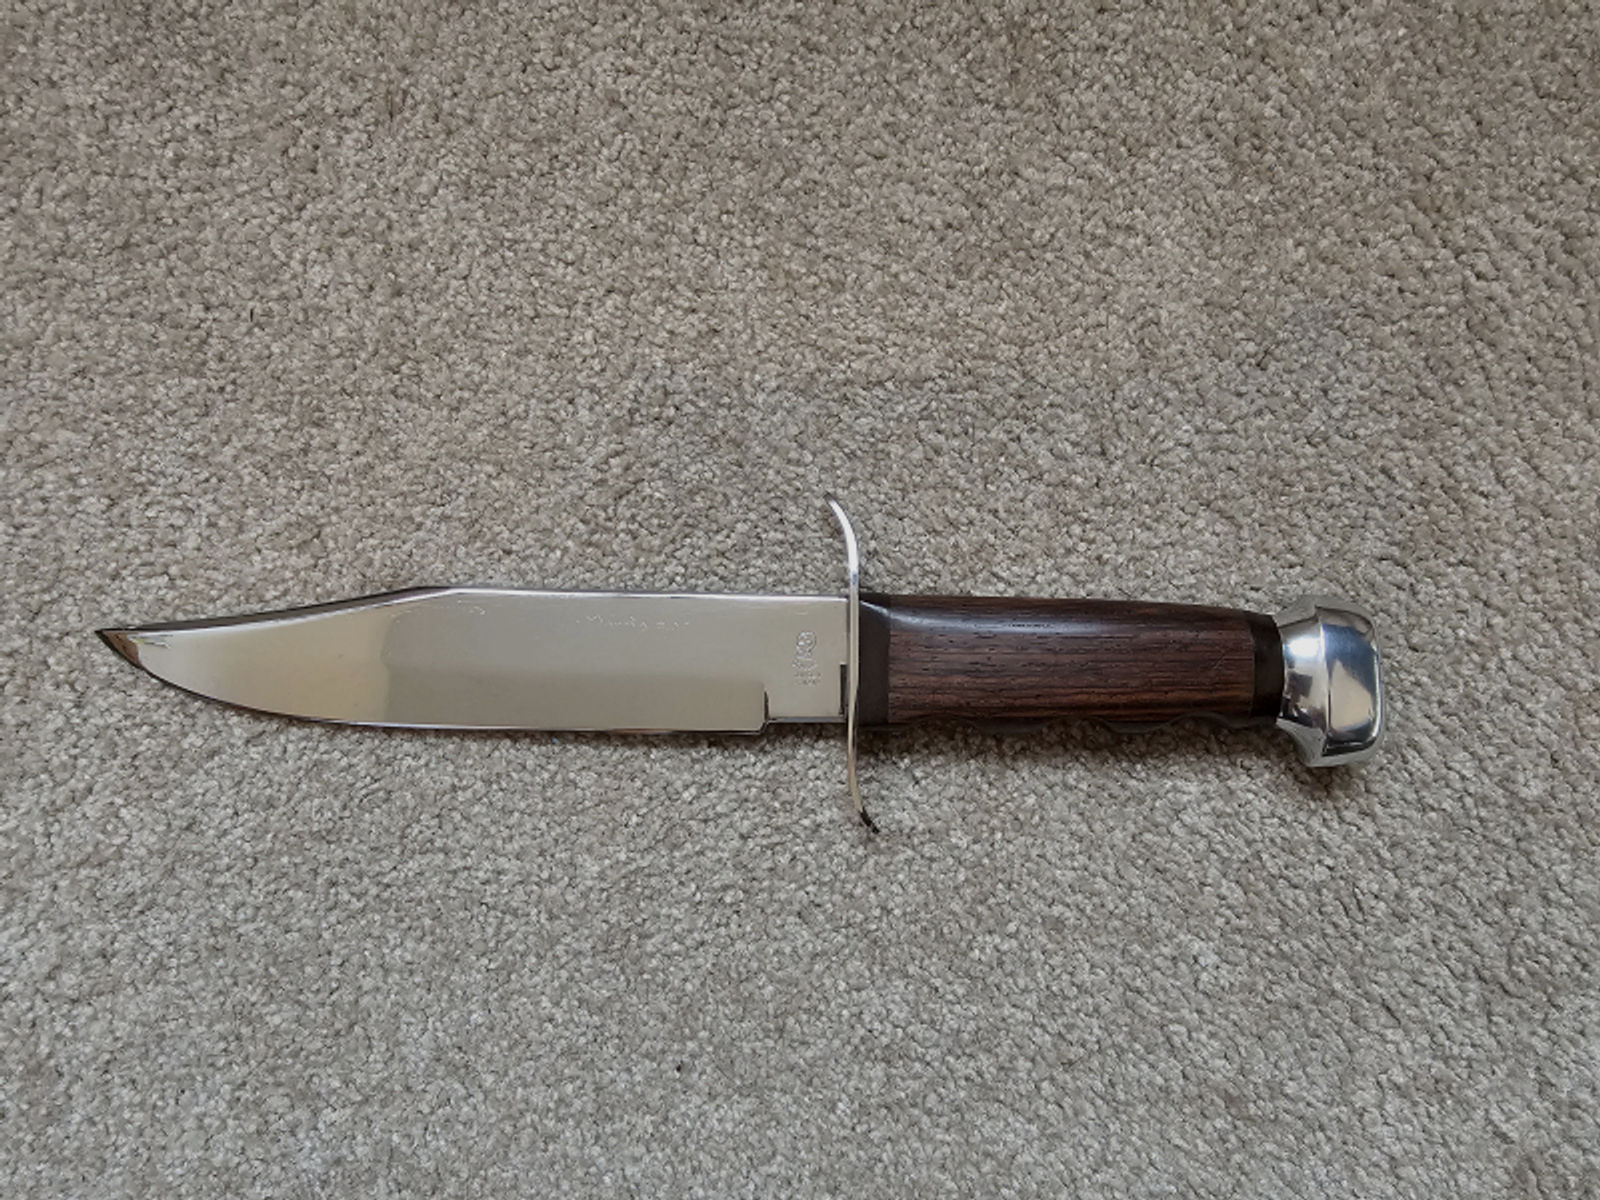 Original Bowie Knife Messer